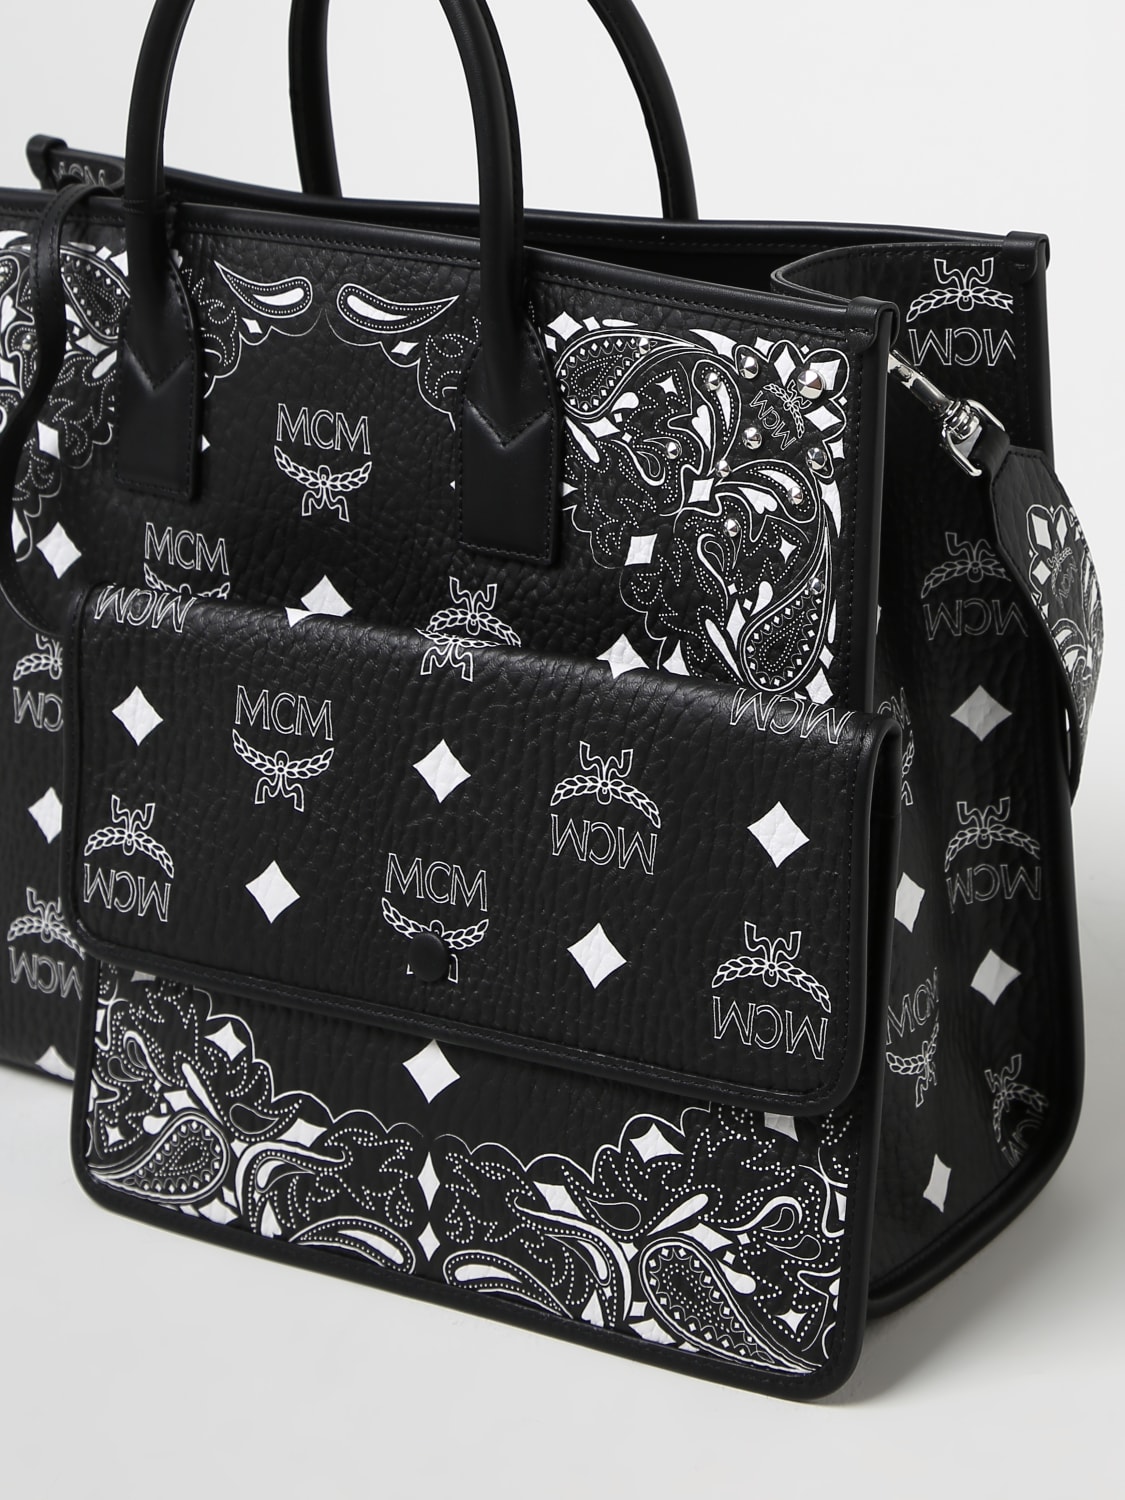 MCM Black Tote Bags